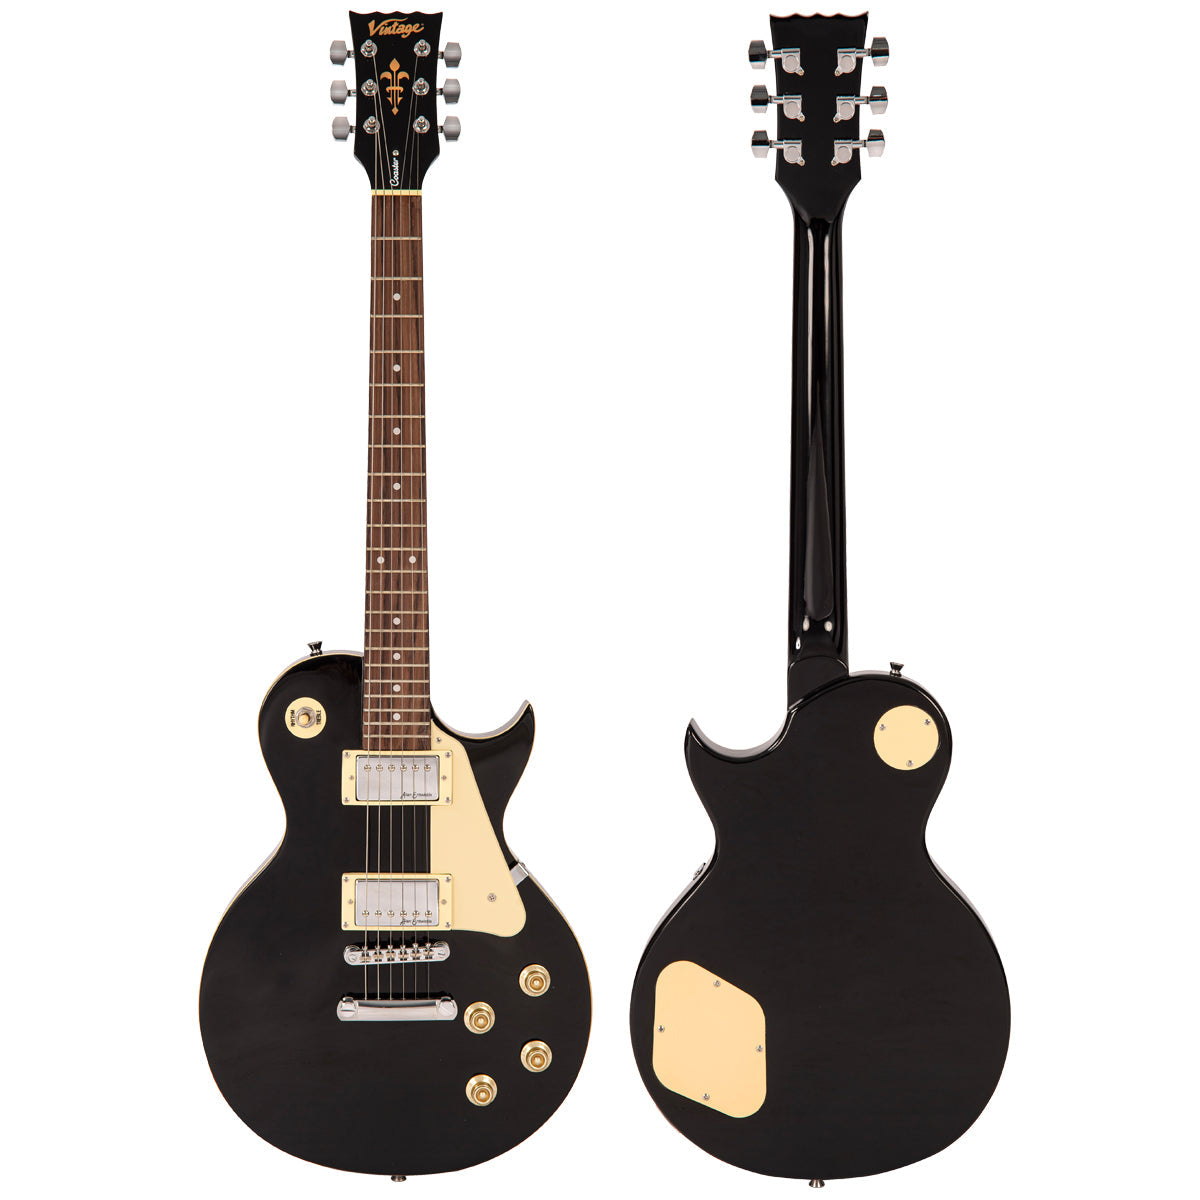 Vintage V10 Coaster Series Electric Guitar ~ Boulevard Black, Electric Guitar for sale at Richards Guitars.